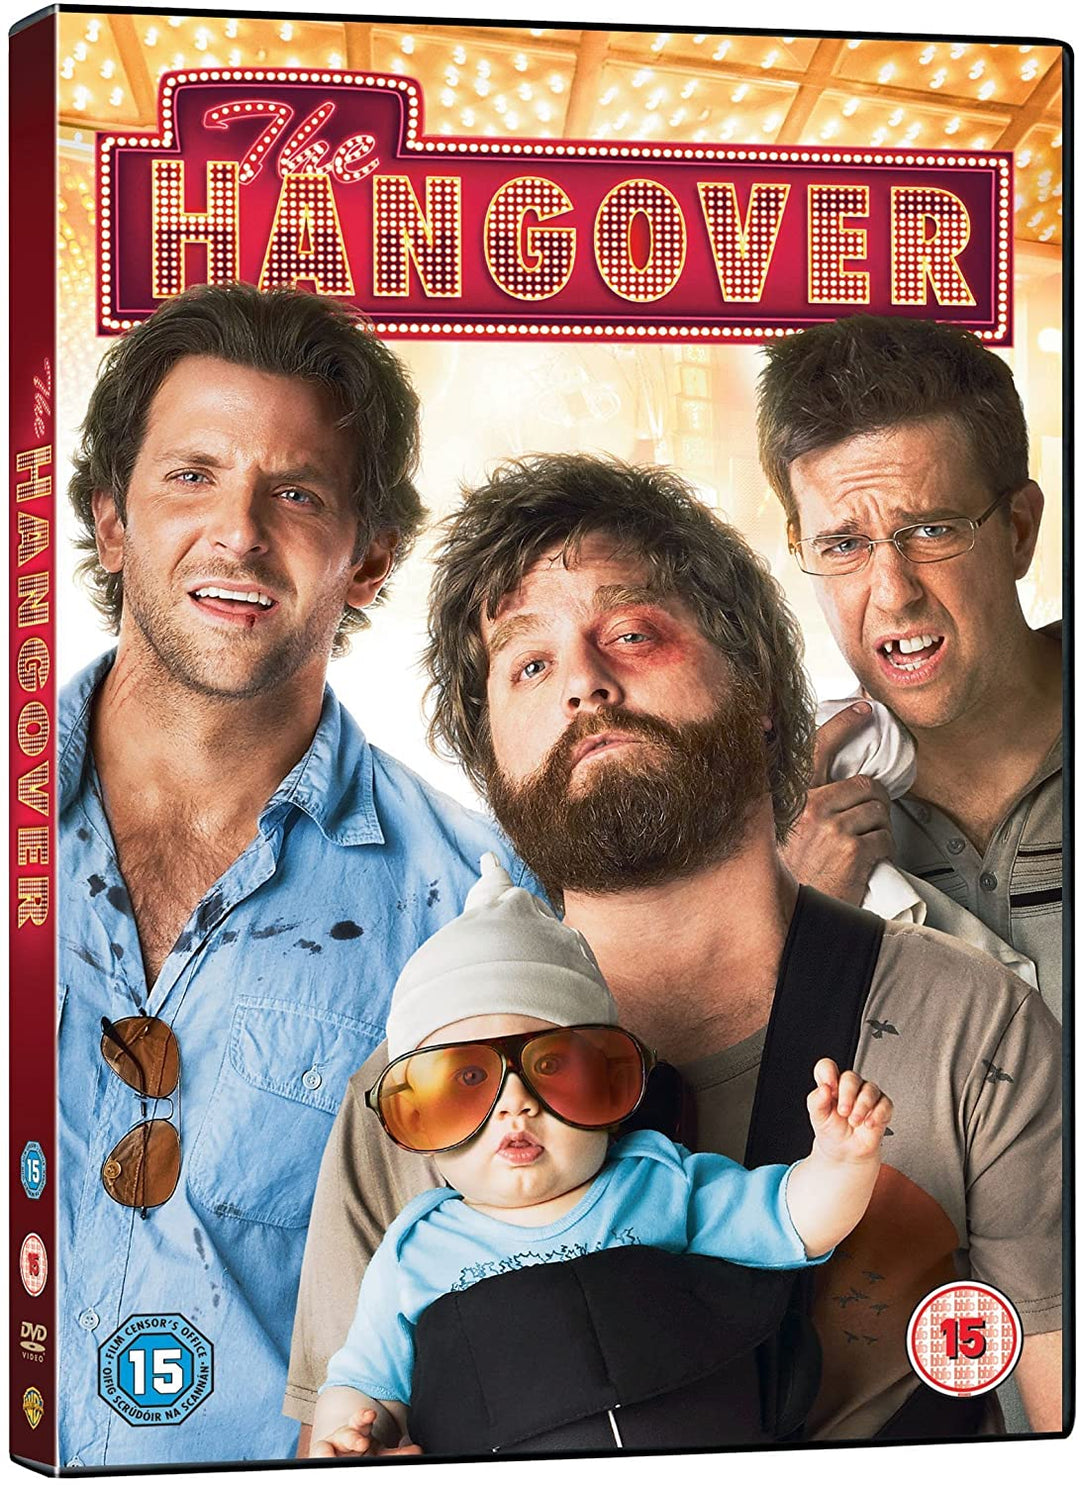 The Hangover [2009] - Comedy [DVD]